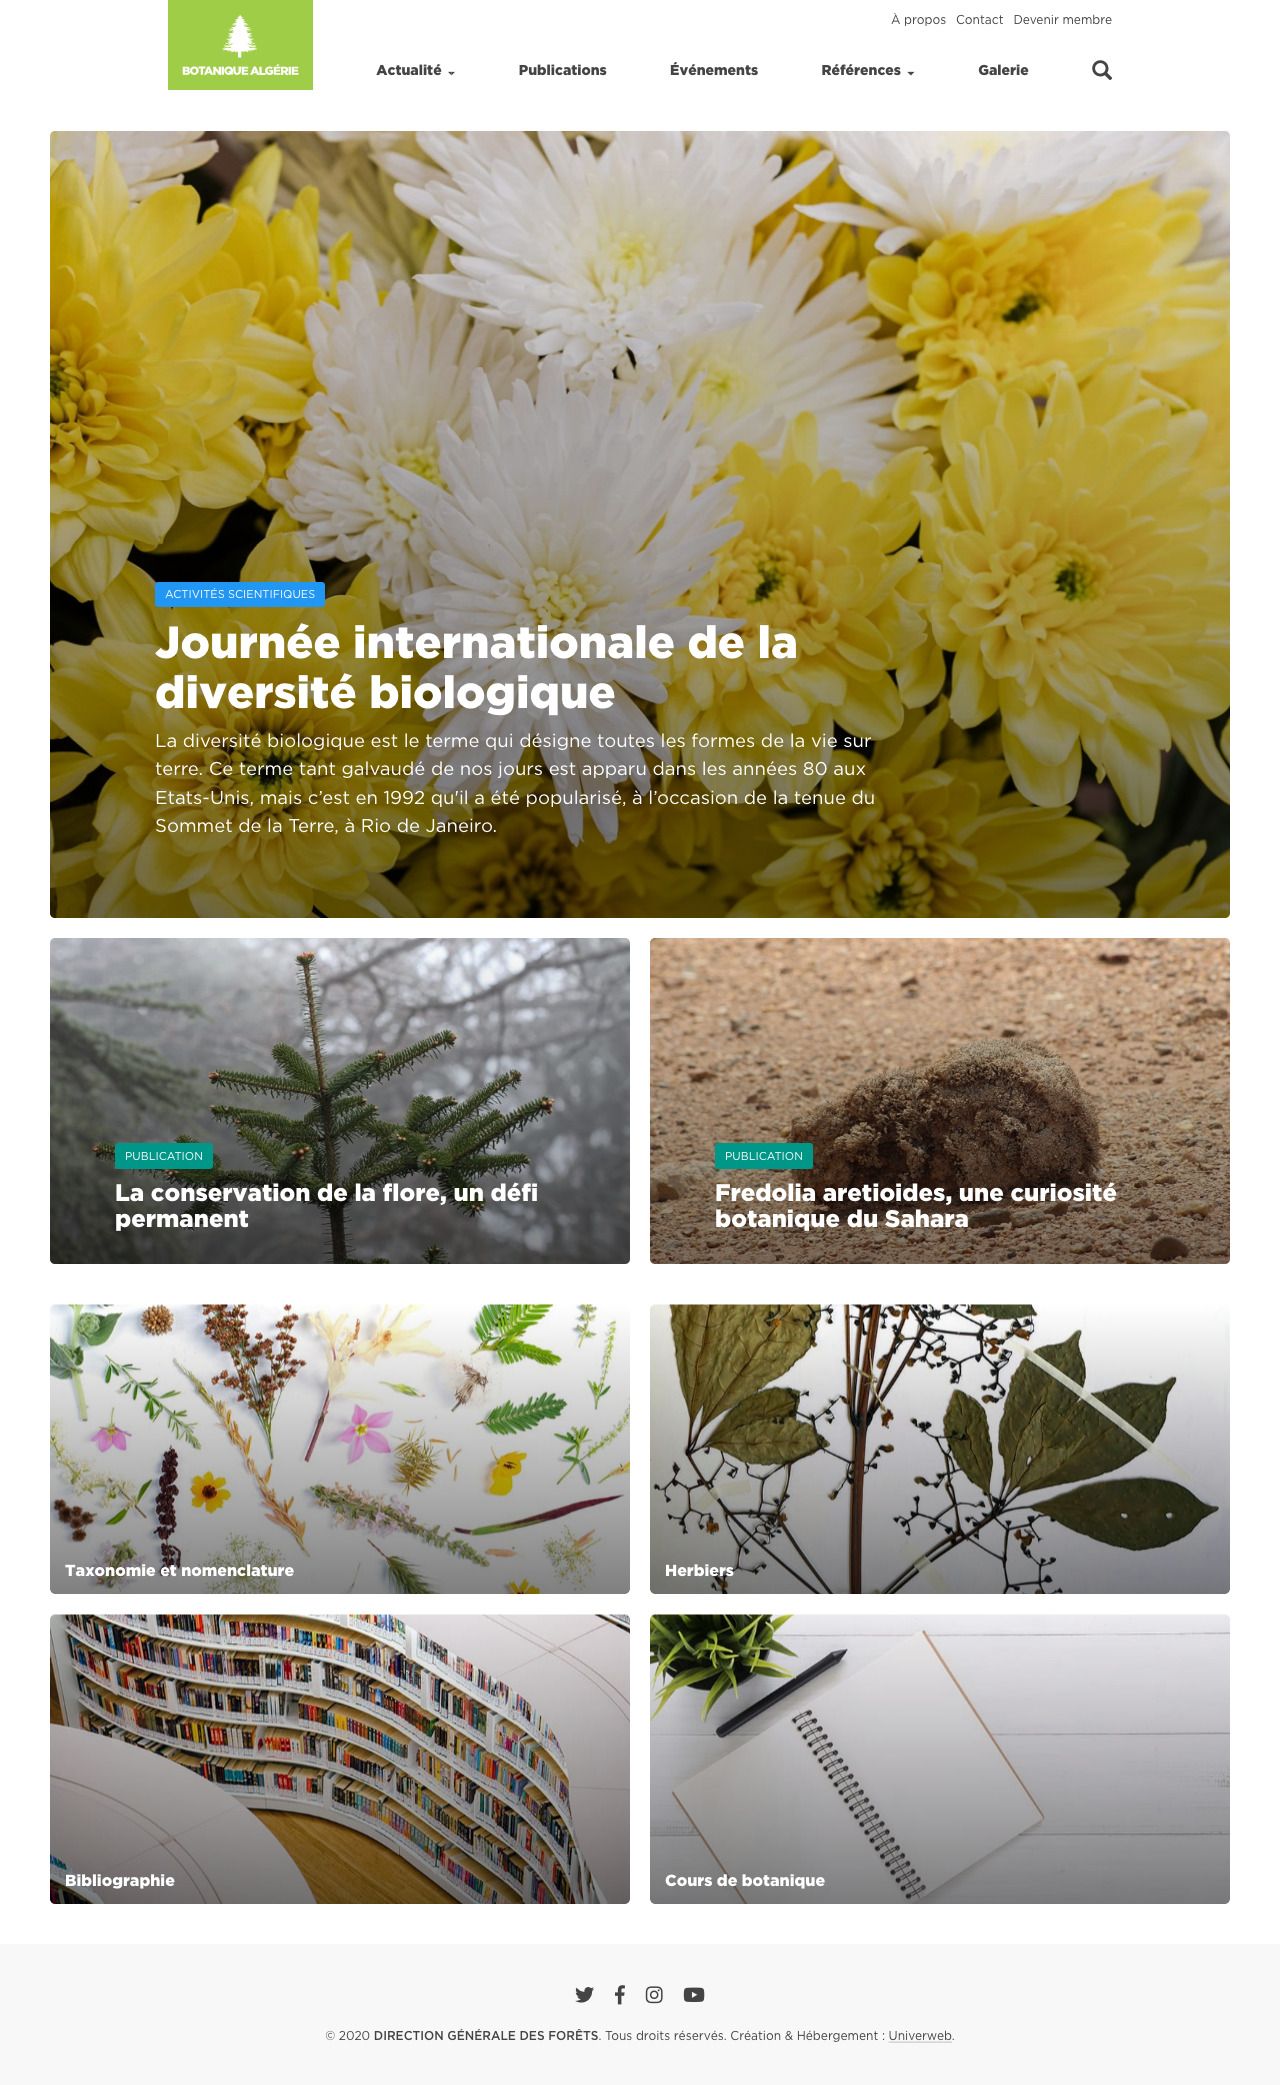 A website overview of Botany Algeria